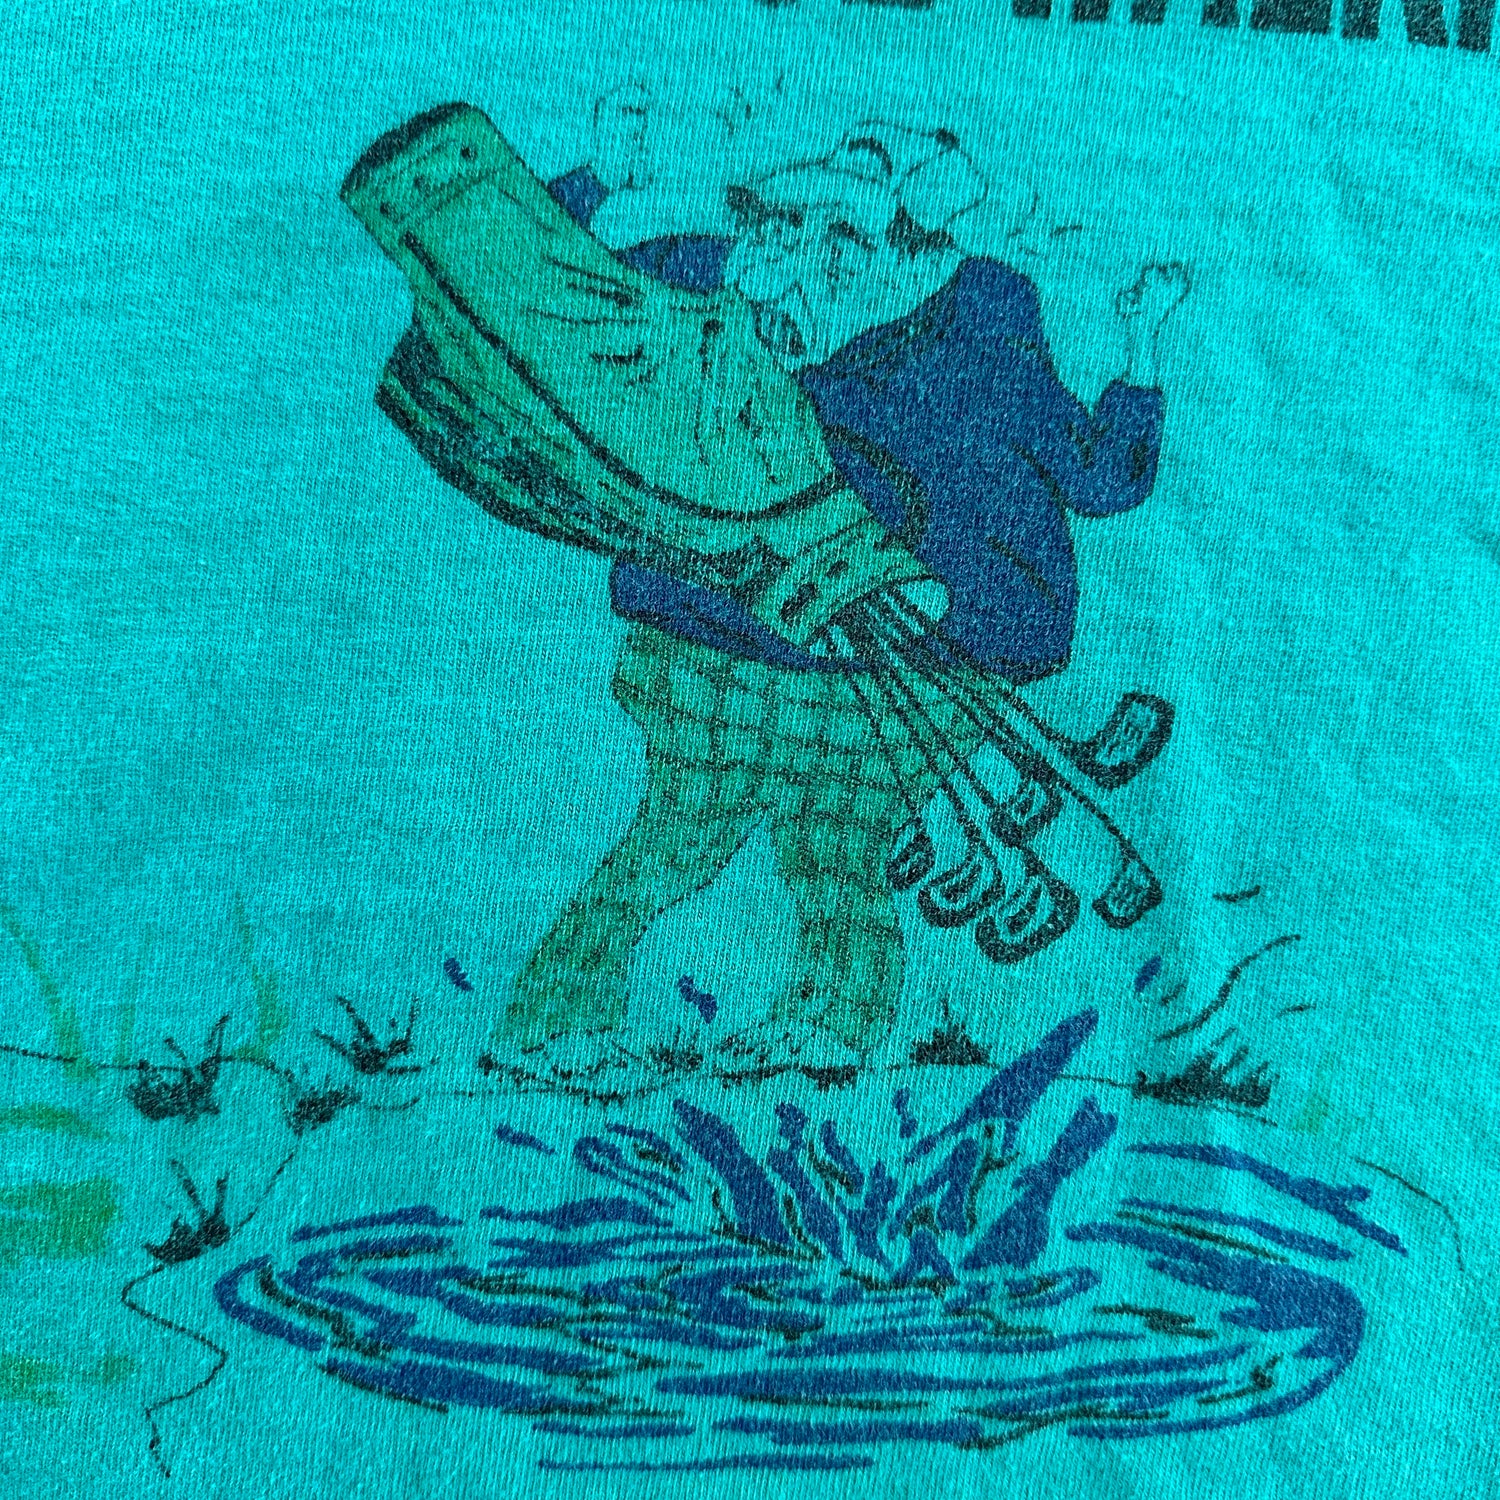 Vintage 1990s Golf T-shirt size Large